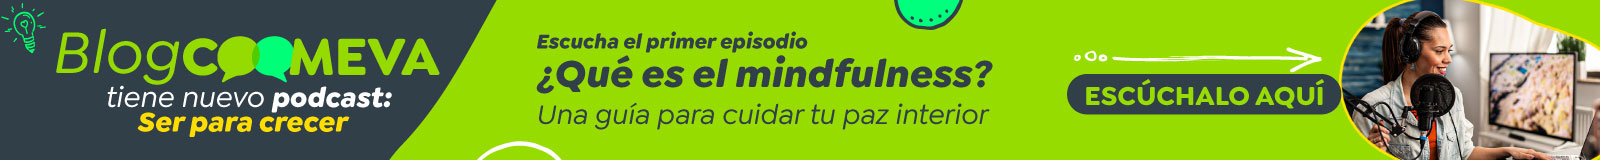 Blog Coomeva Podcast ¿Qué es el mindfulness? - Ser para crecer